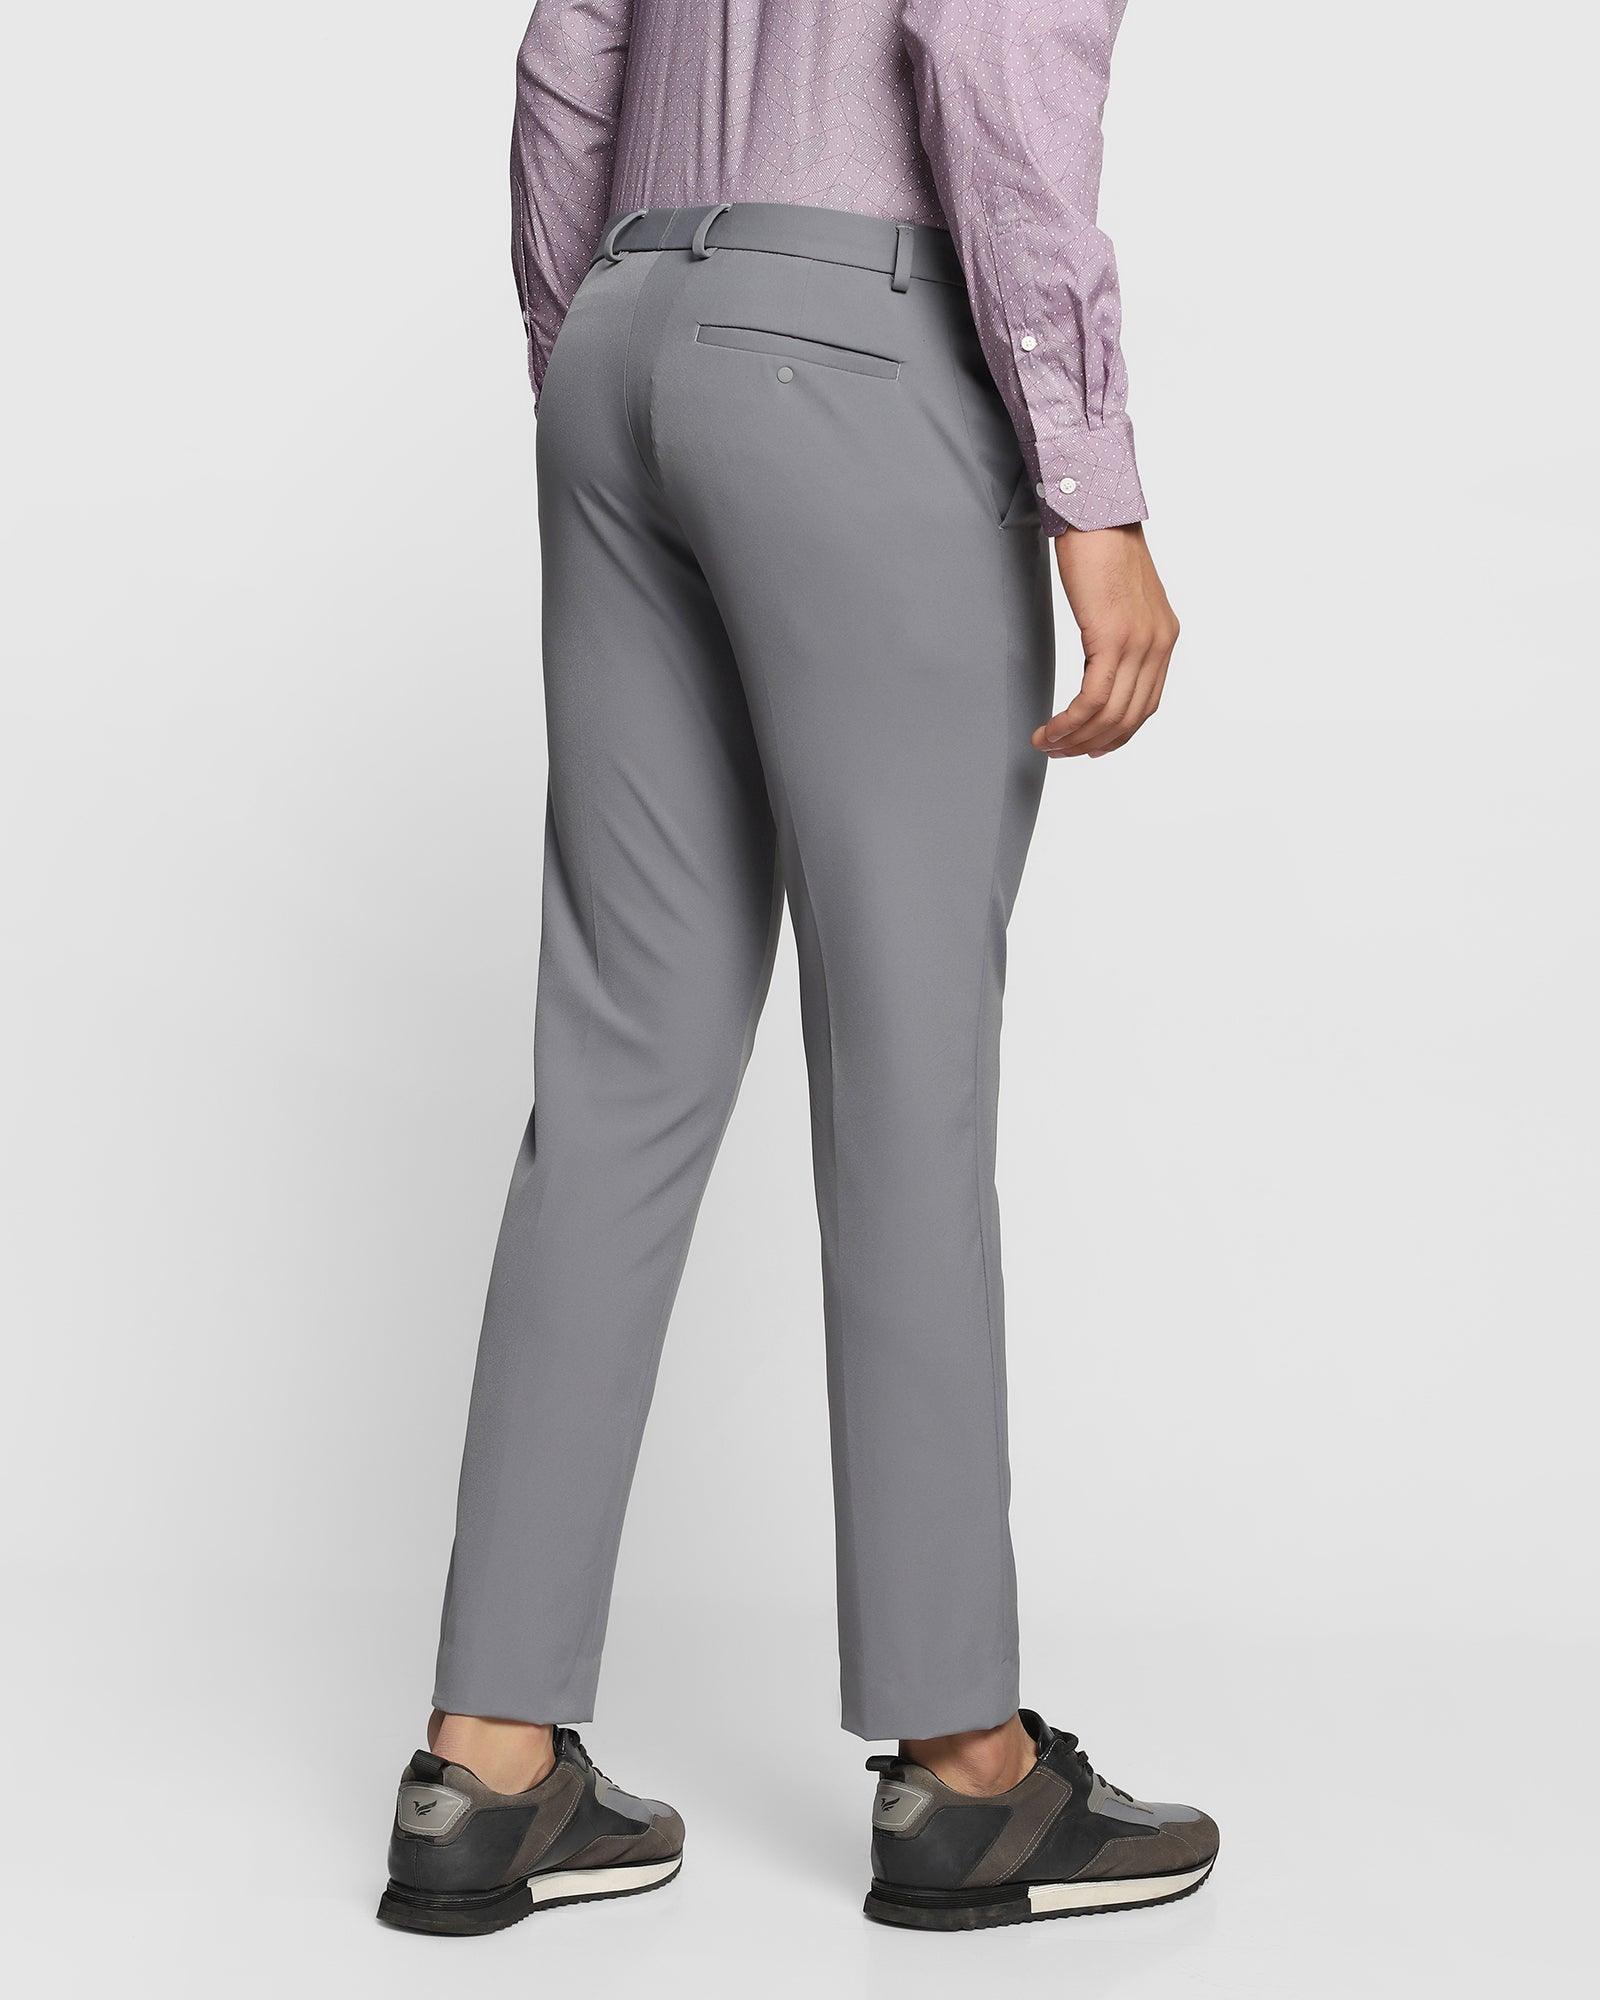 Blackberrys Men's Formal B-91 Skinny Fit Non-Stretch Trousers (Size:  38)-NL-TEDRO # Olive : Amazon.in: Fashion